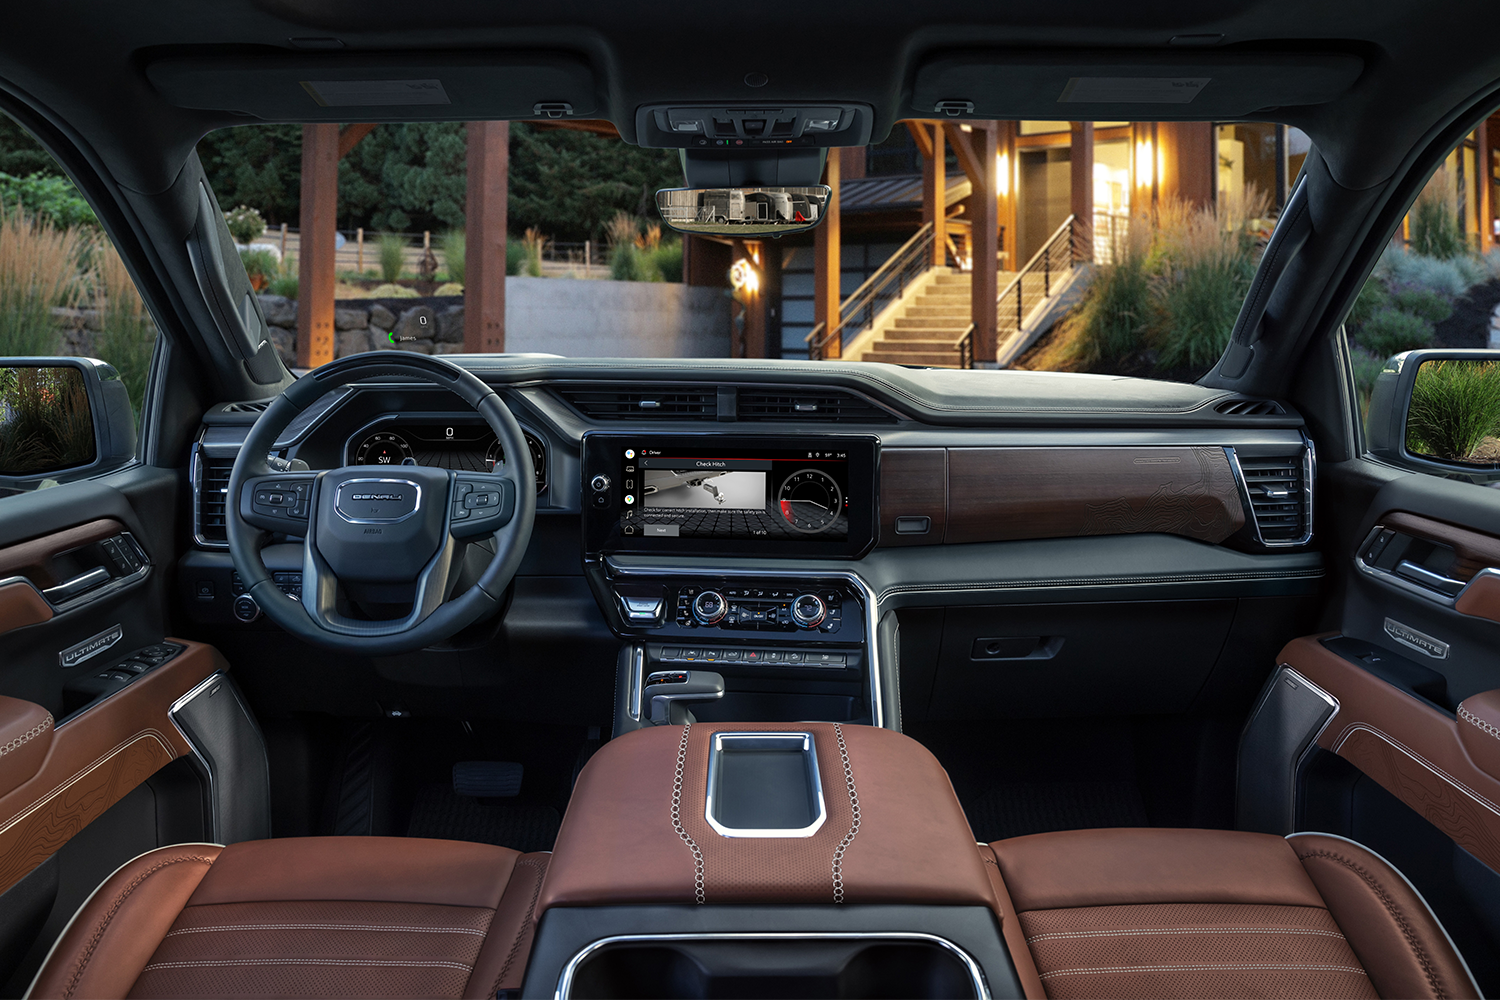 The luxurious cabin of the 2022 GMC Sierra Denali Ultimate, a leading luxury pickup truck